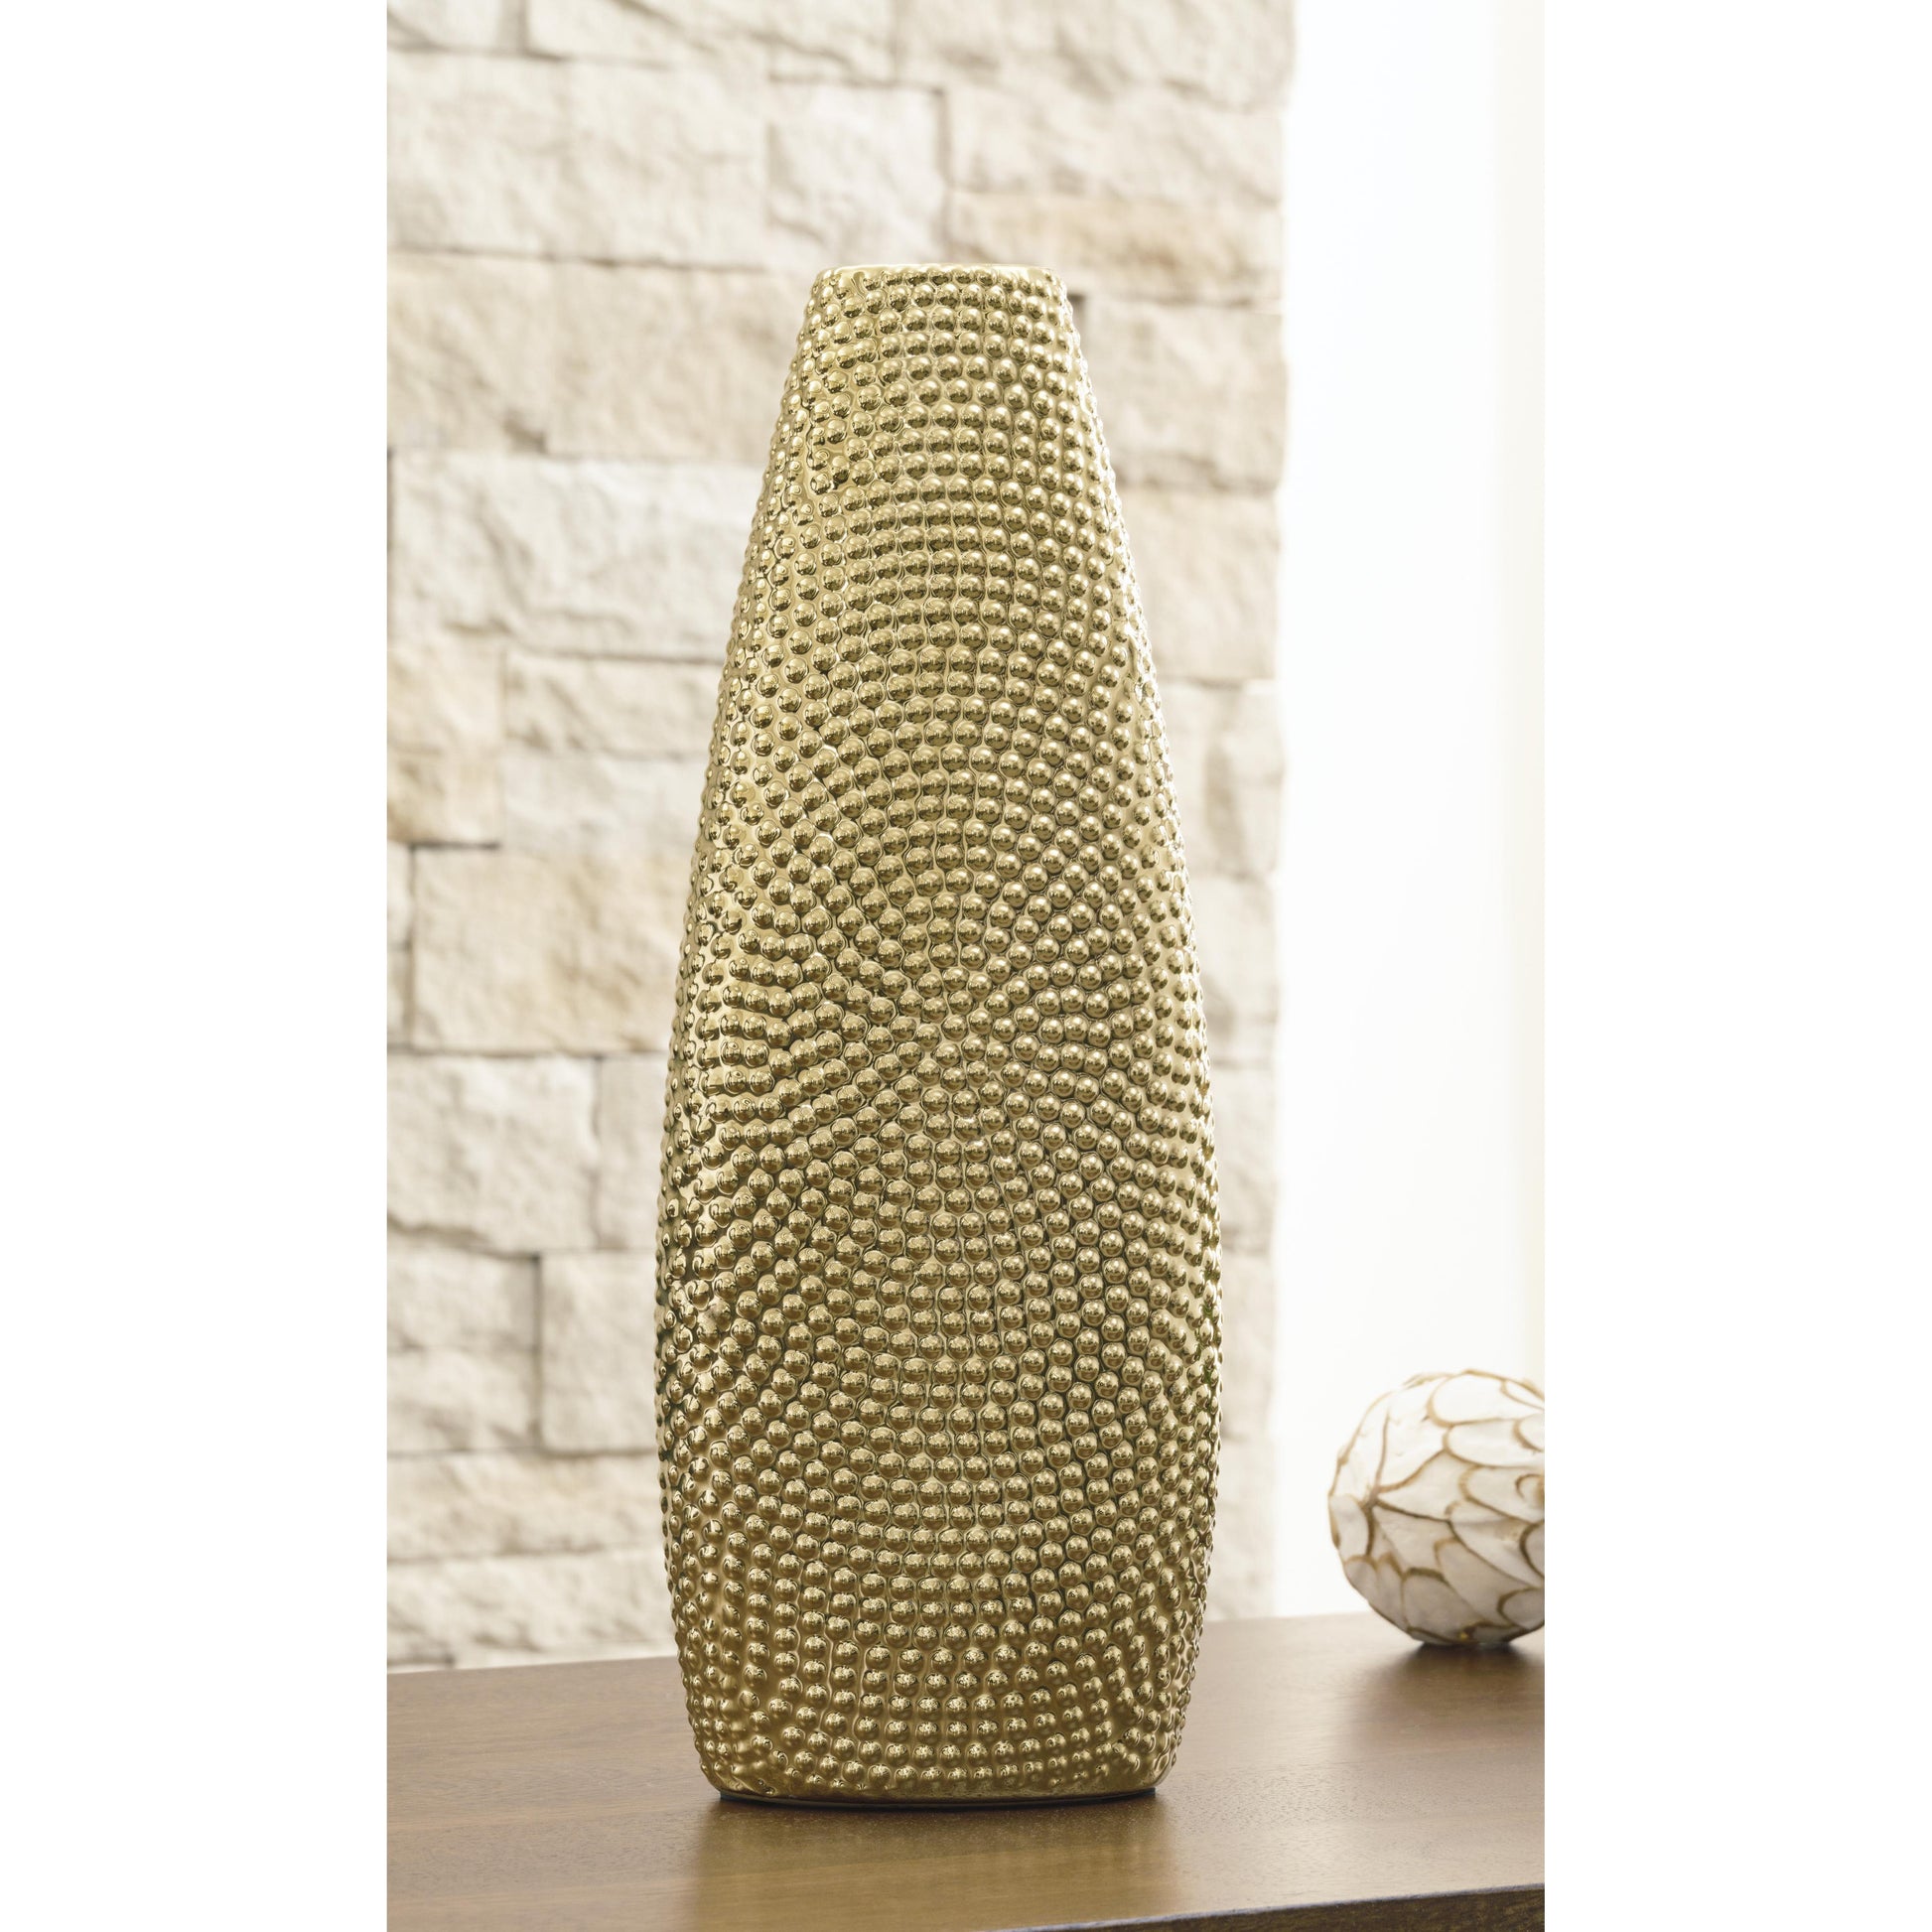 Signature Design by Ashley Home Decor Vases & Bowls A2000576 IMAGE 4